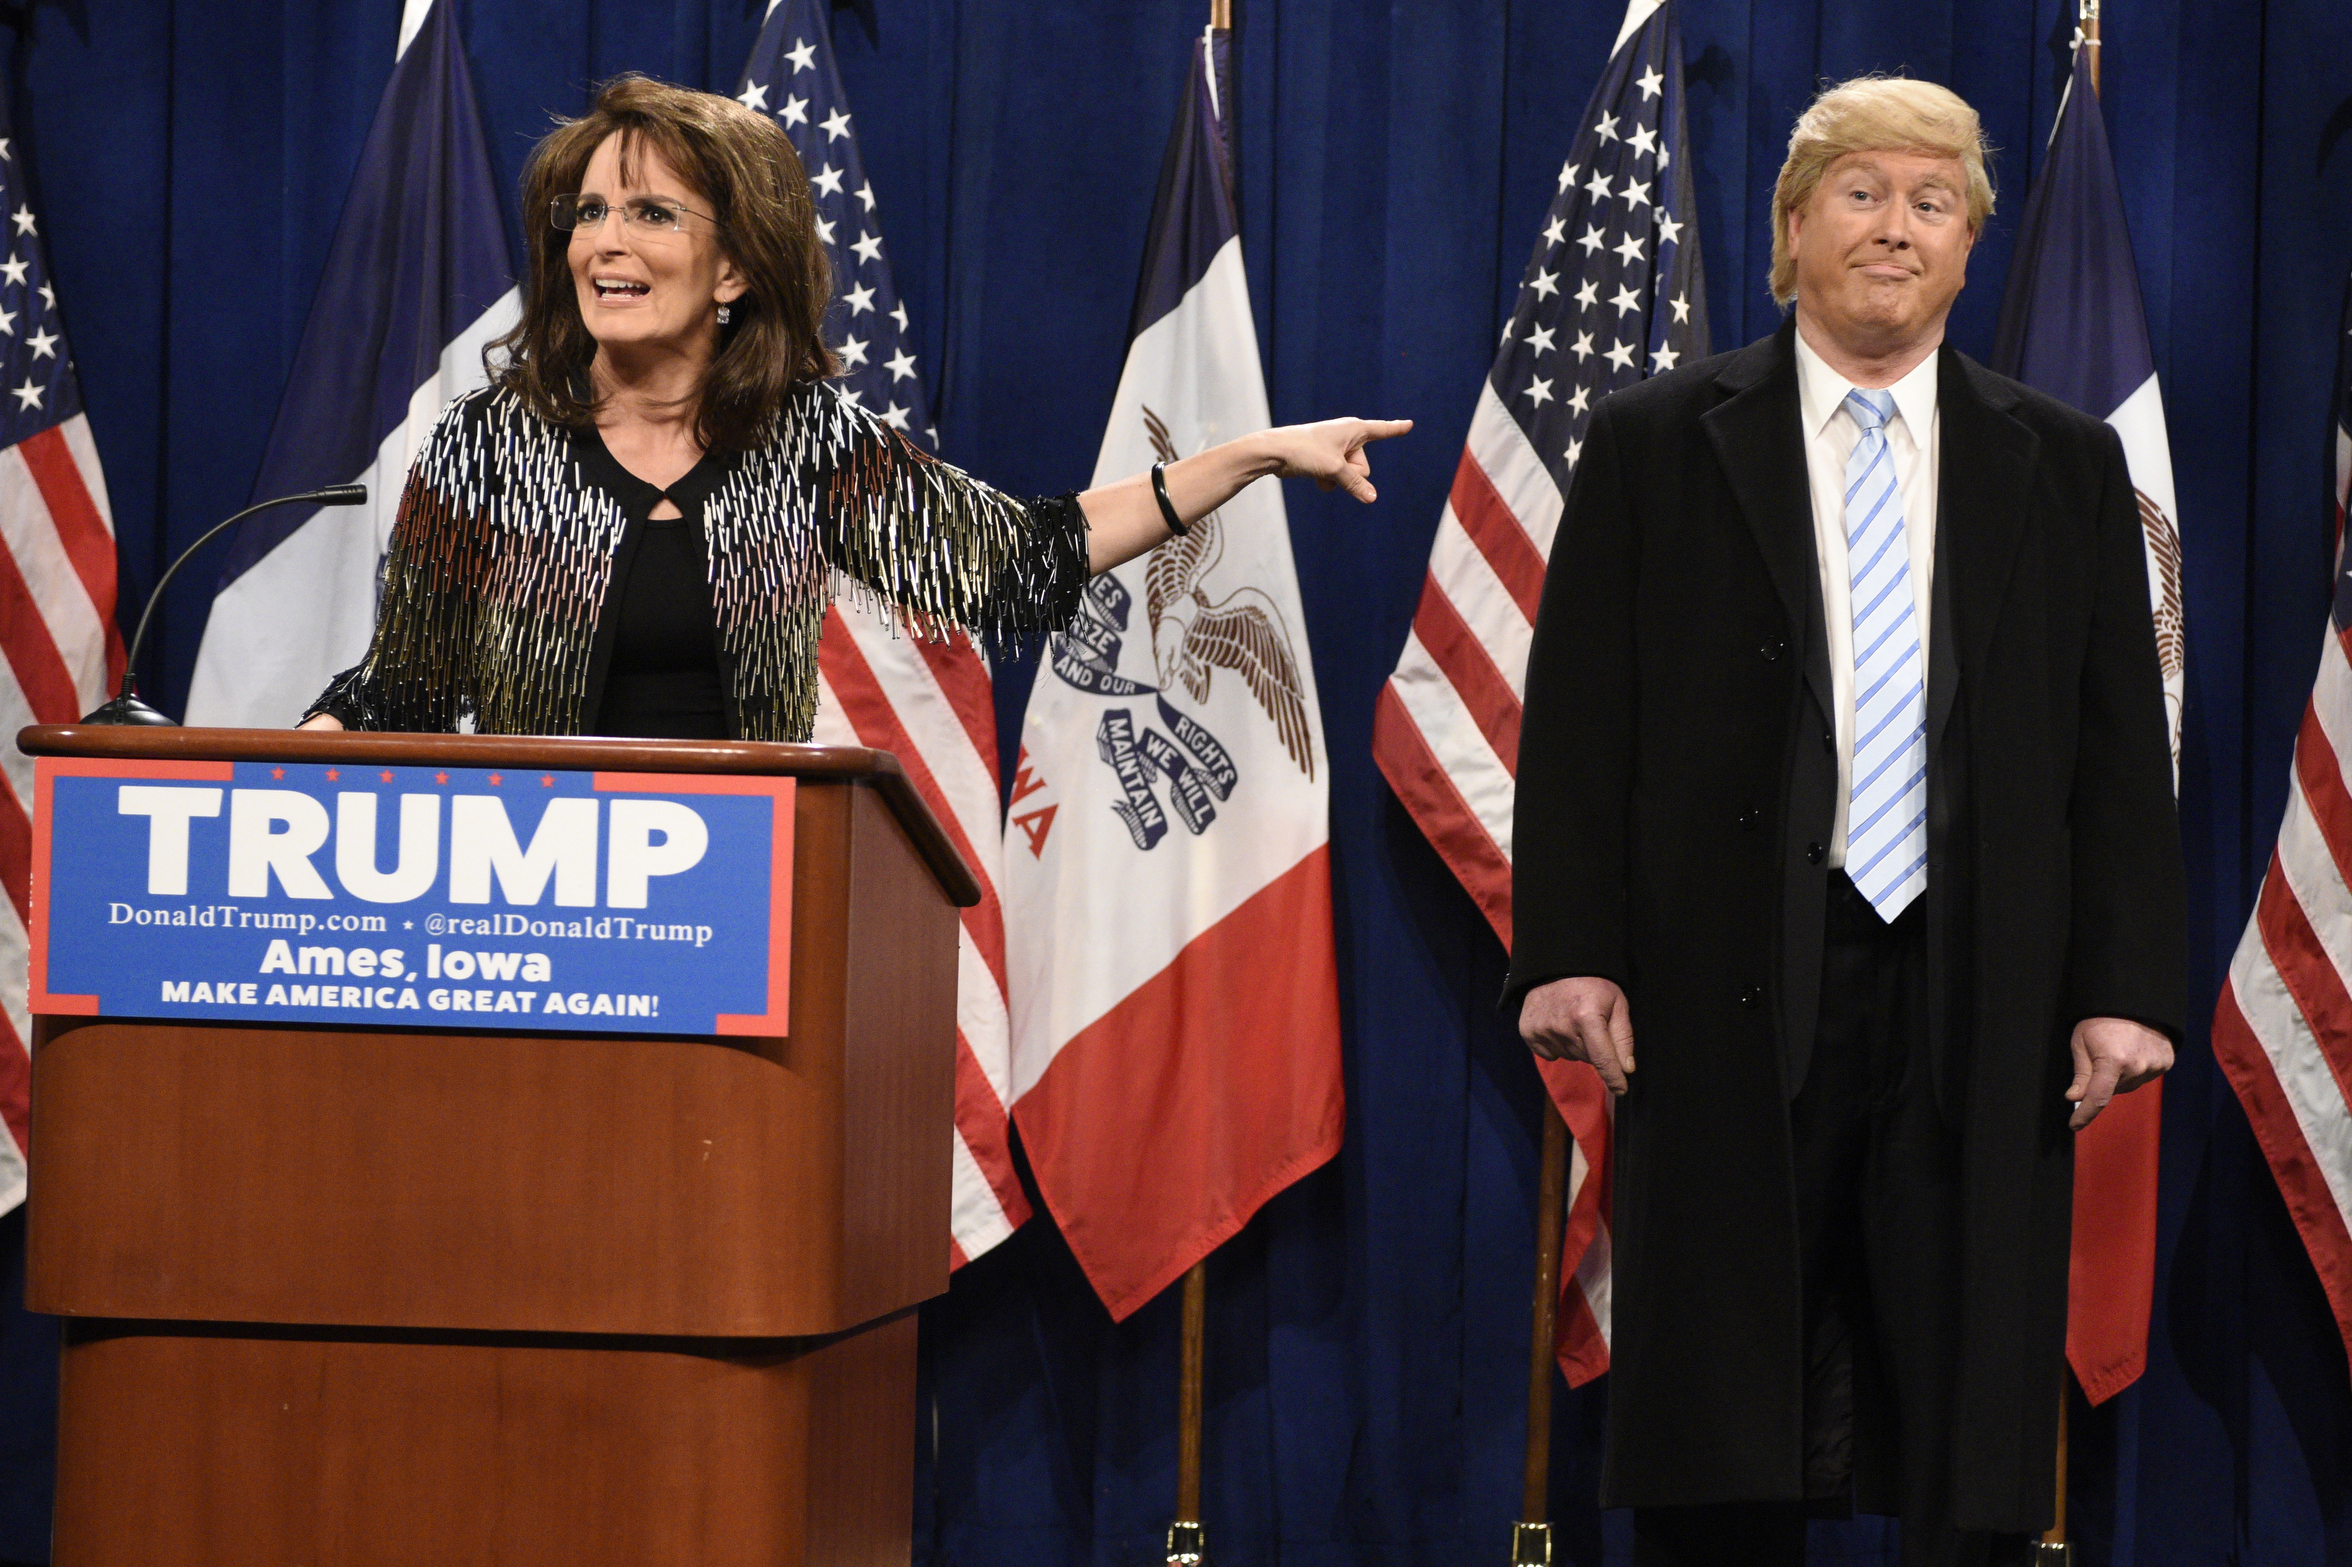 Darrell Hammond dressed as Donald Trump on Saturday Night Live on Jan. 23, 2016.